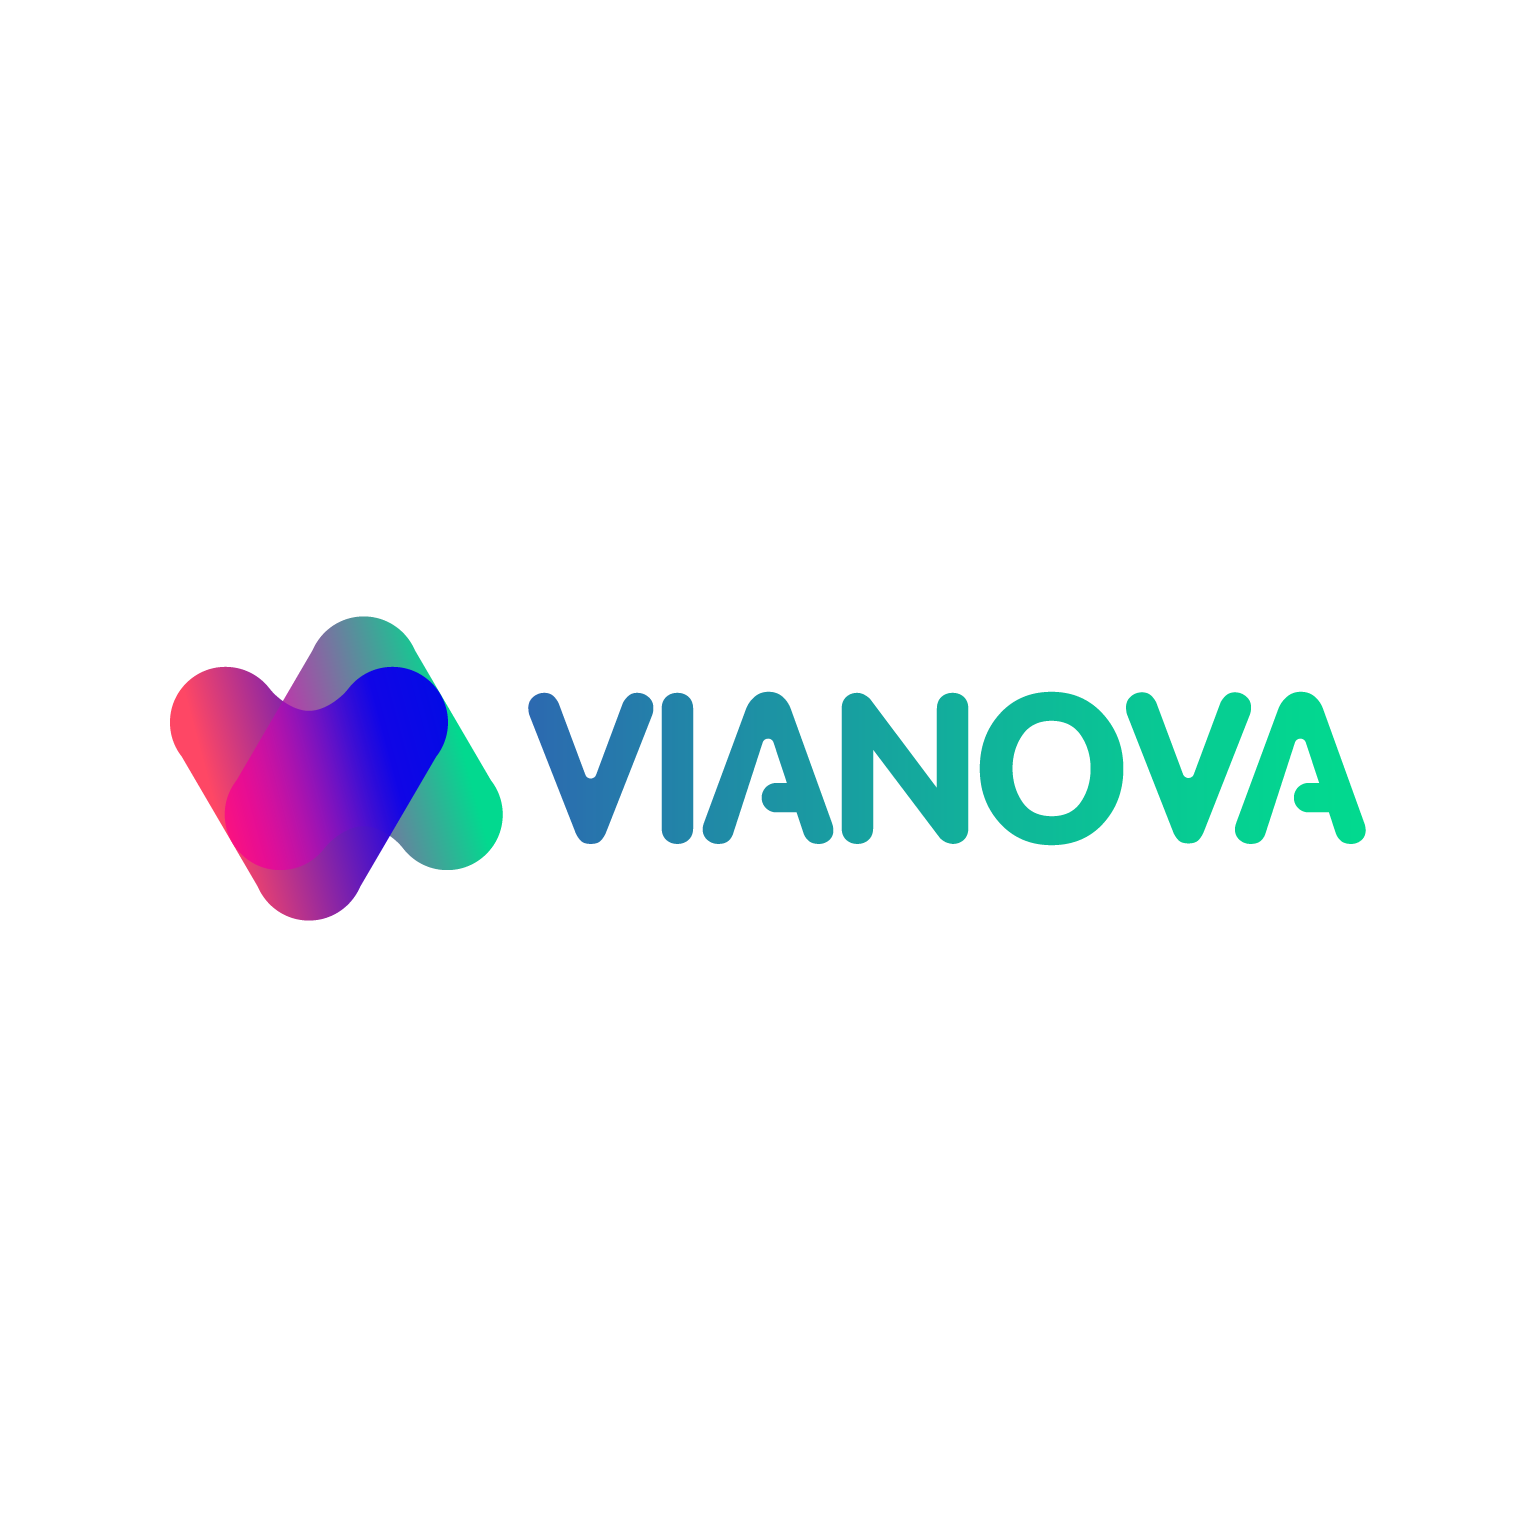 Vianova Logos